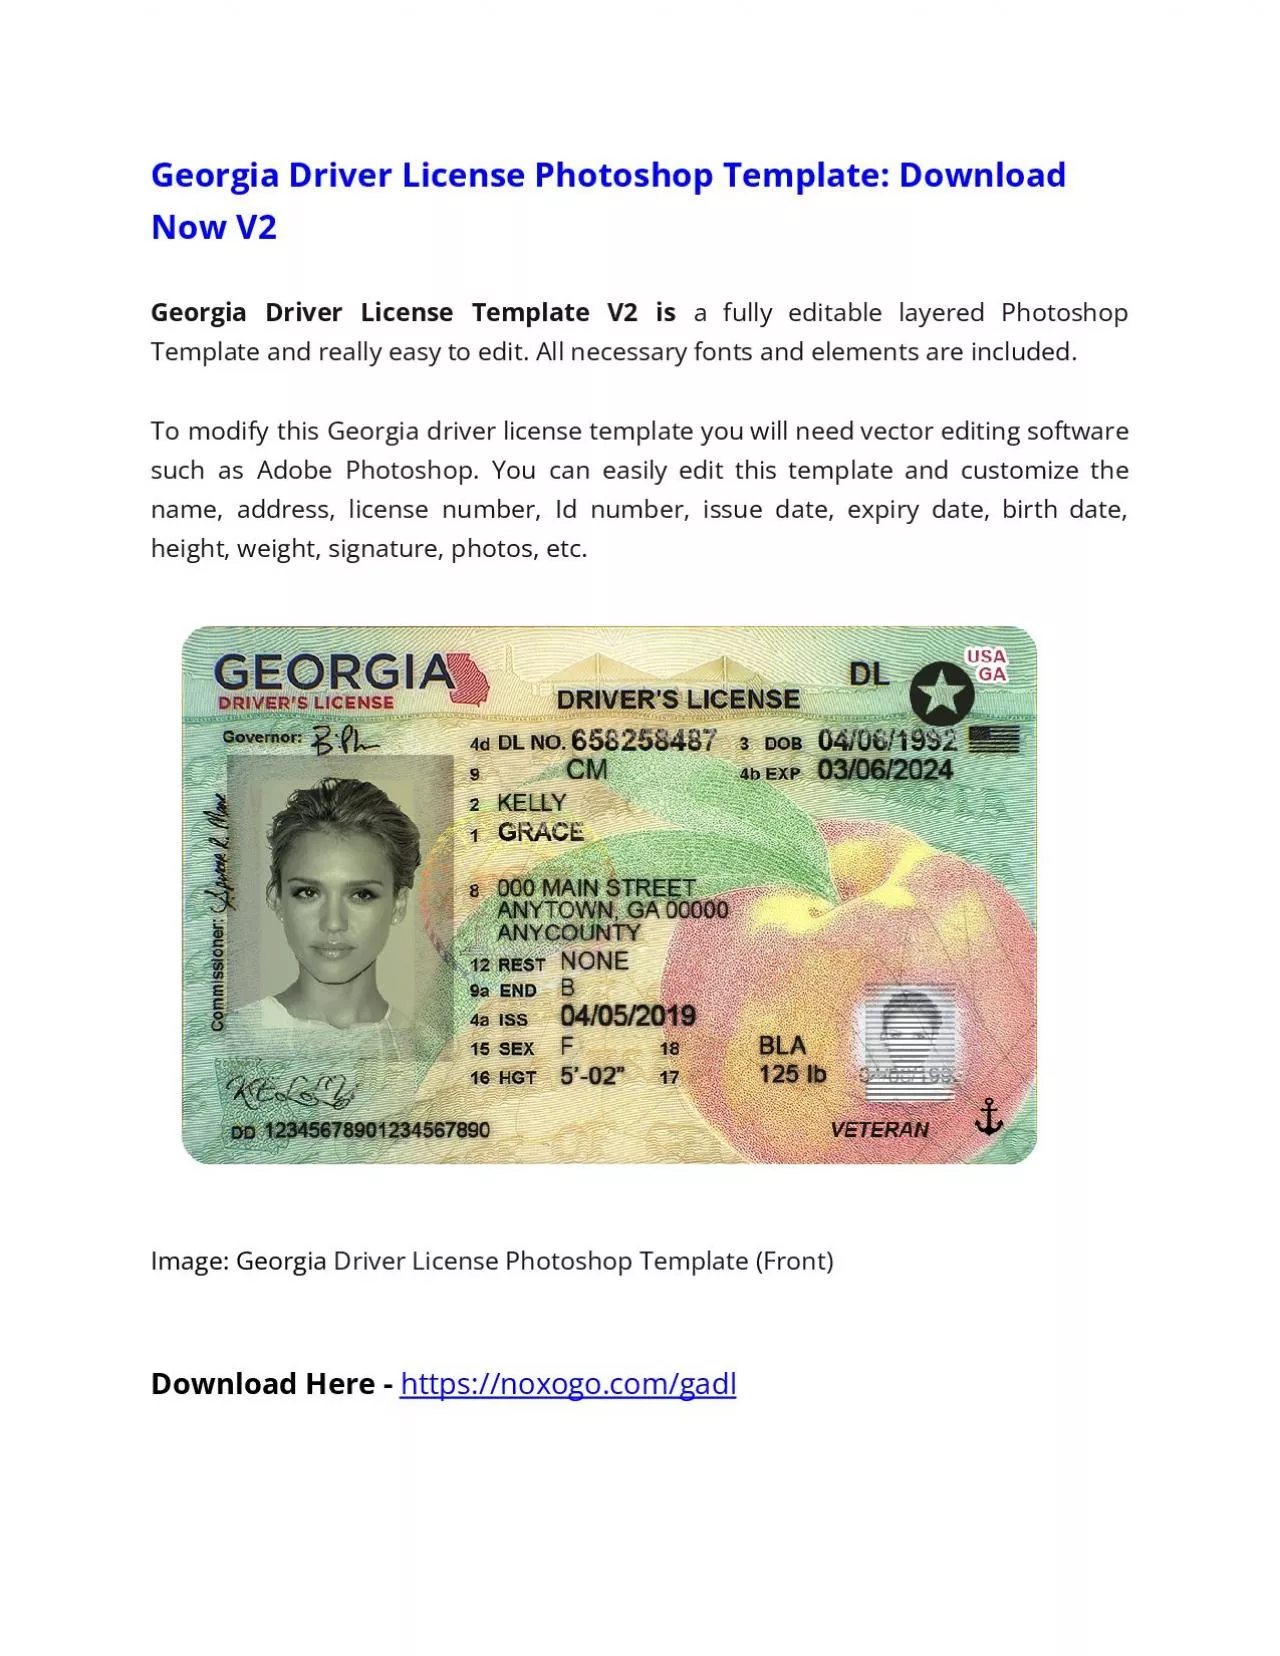 Georgia Driver License Photoshop Template V2